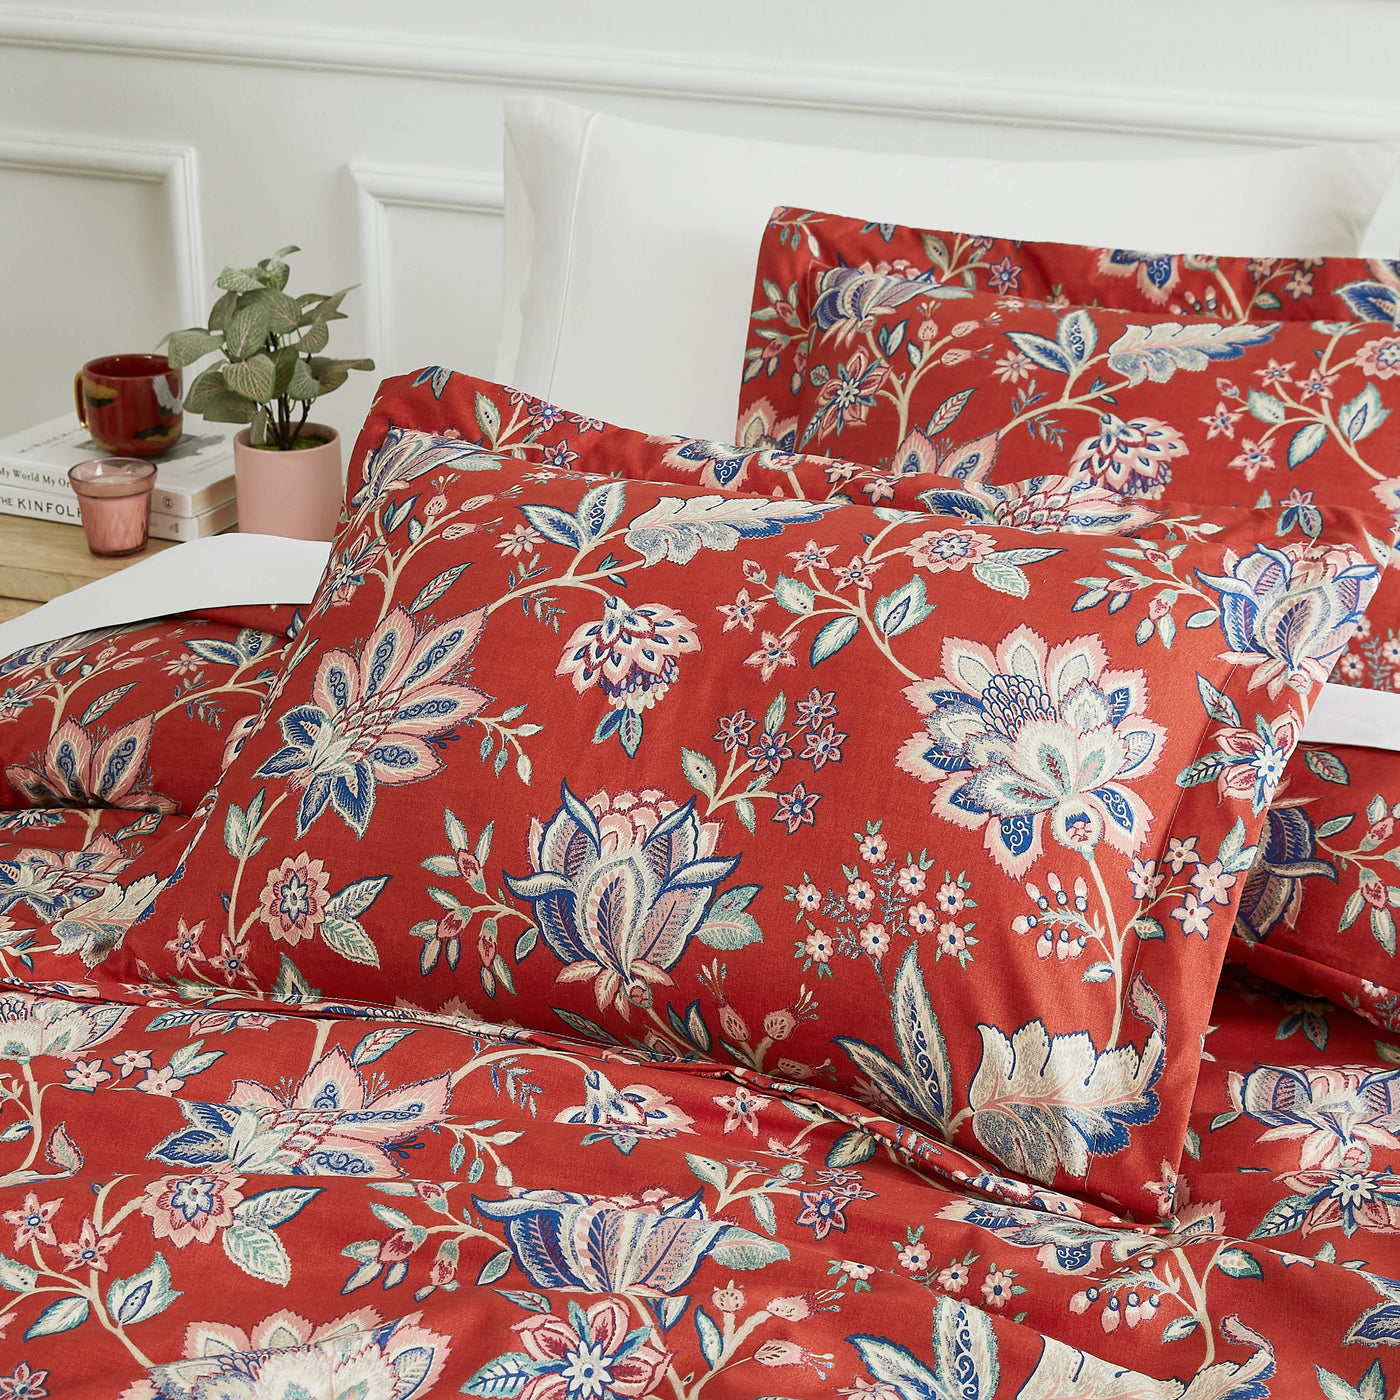 Details and Prints of Jacobean Floral Duvet Cover Set #color_jacobean-floral-red